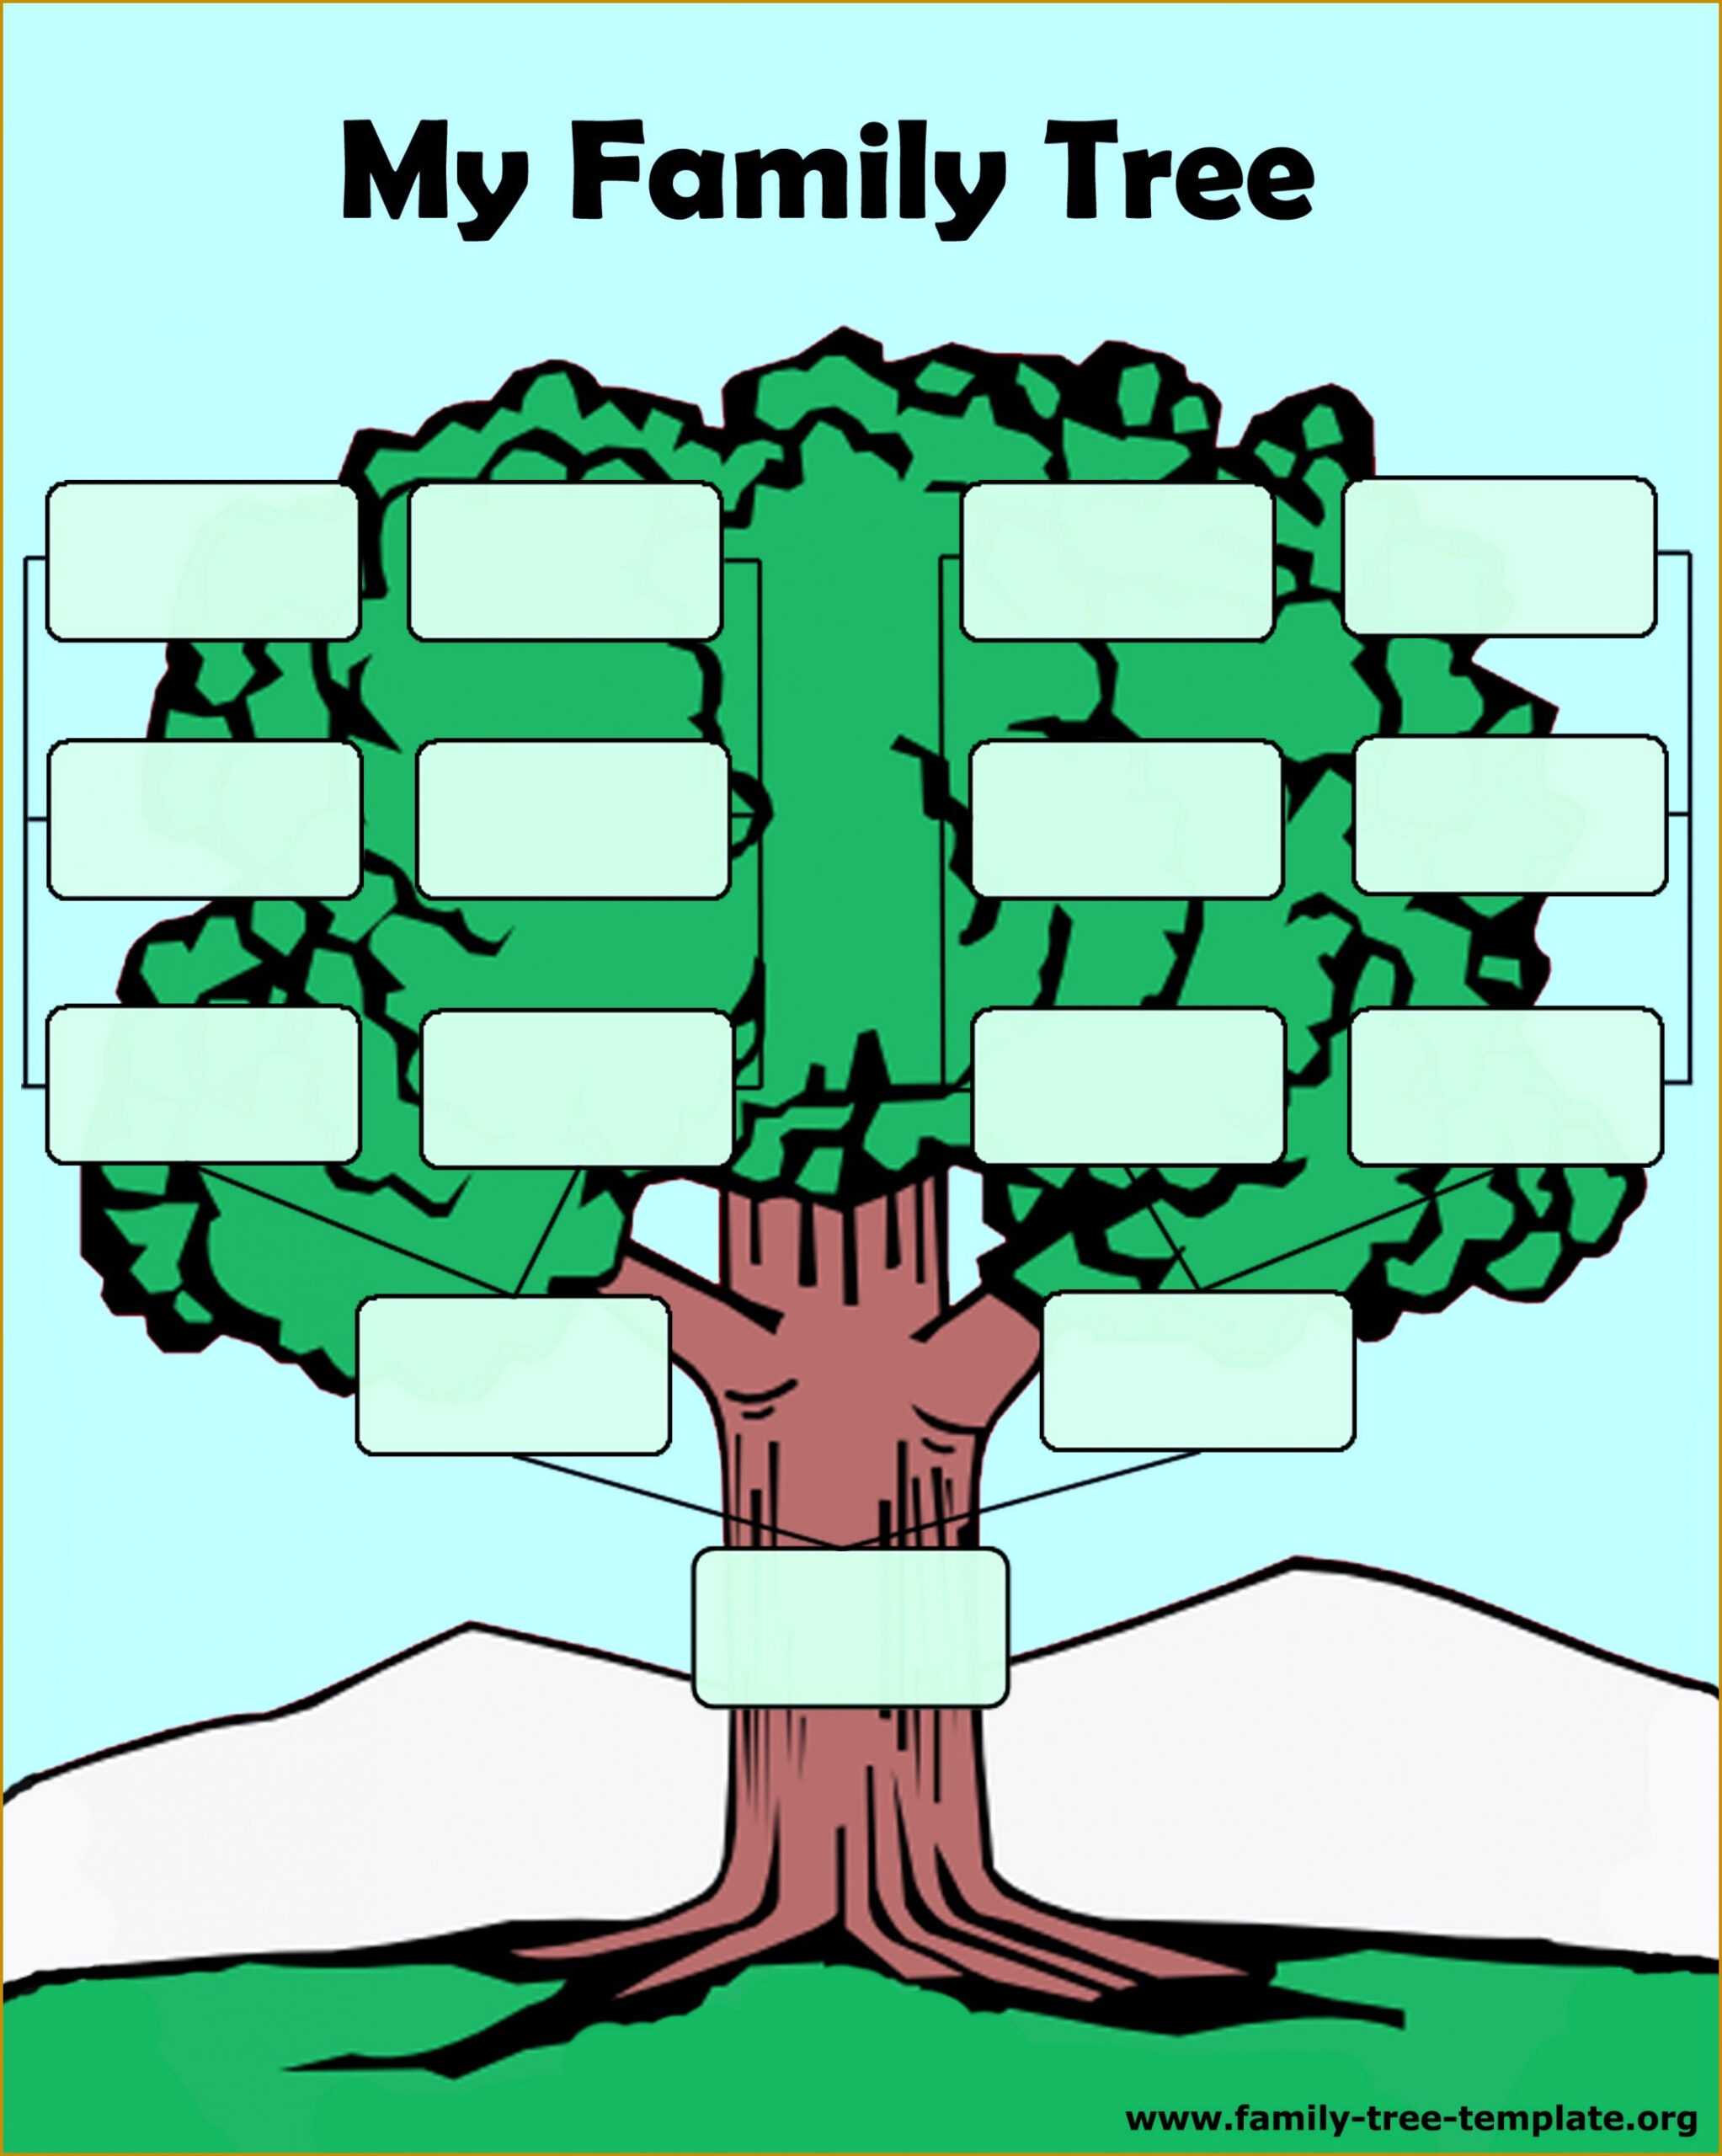 031 Simple Family Tree Template Breathtaking Ideas With With 3 Generation Family Tree Template Word